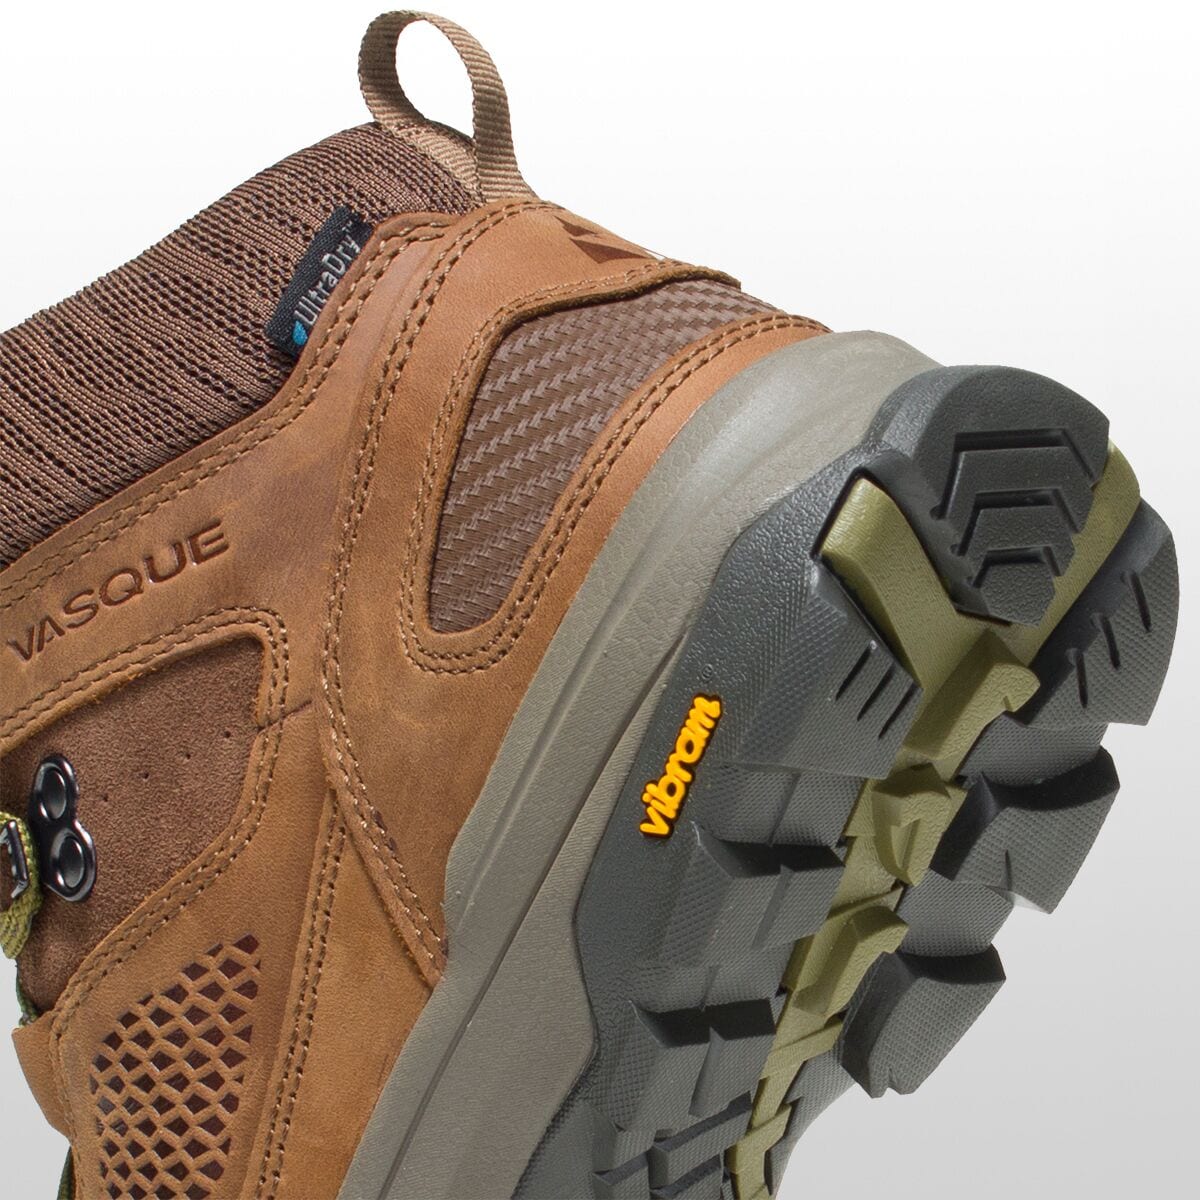 Vasque Talus AT UltraDry Hiking Boot - Men's - Footwear